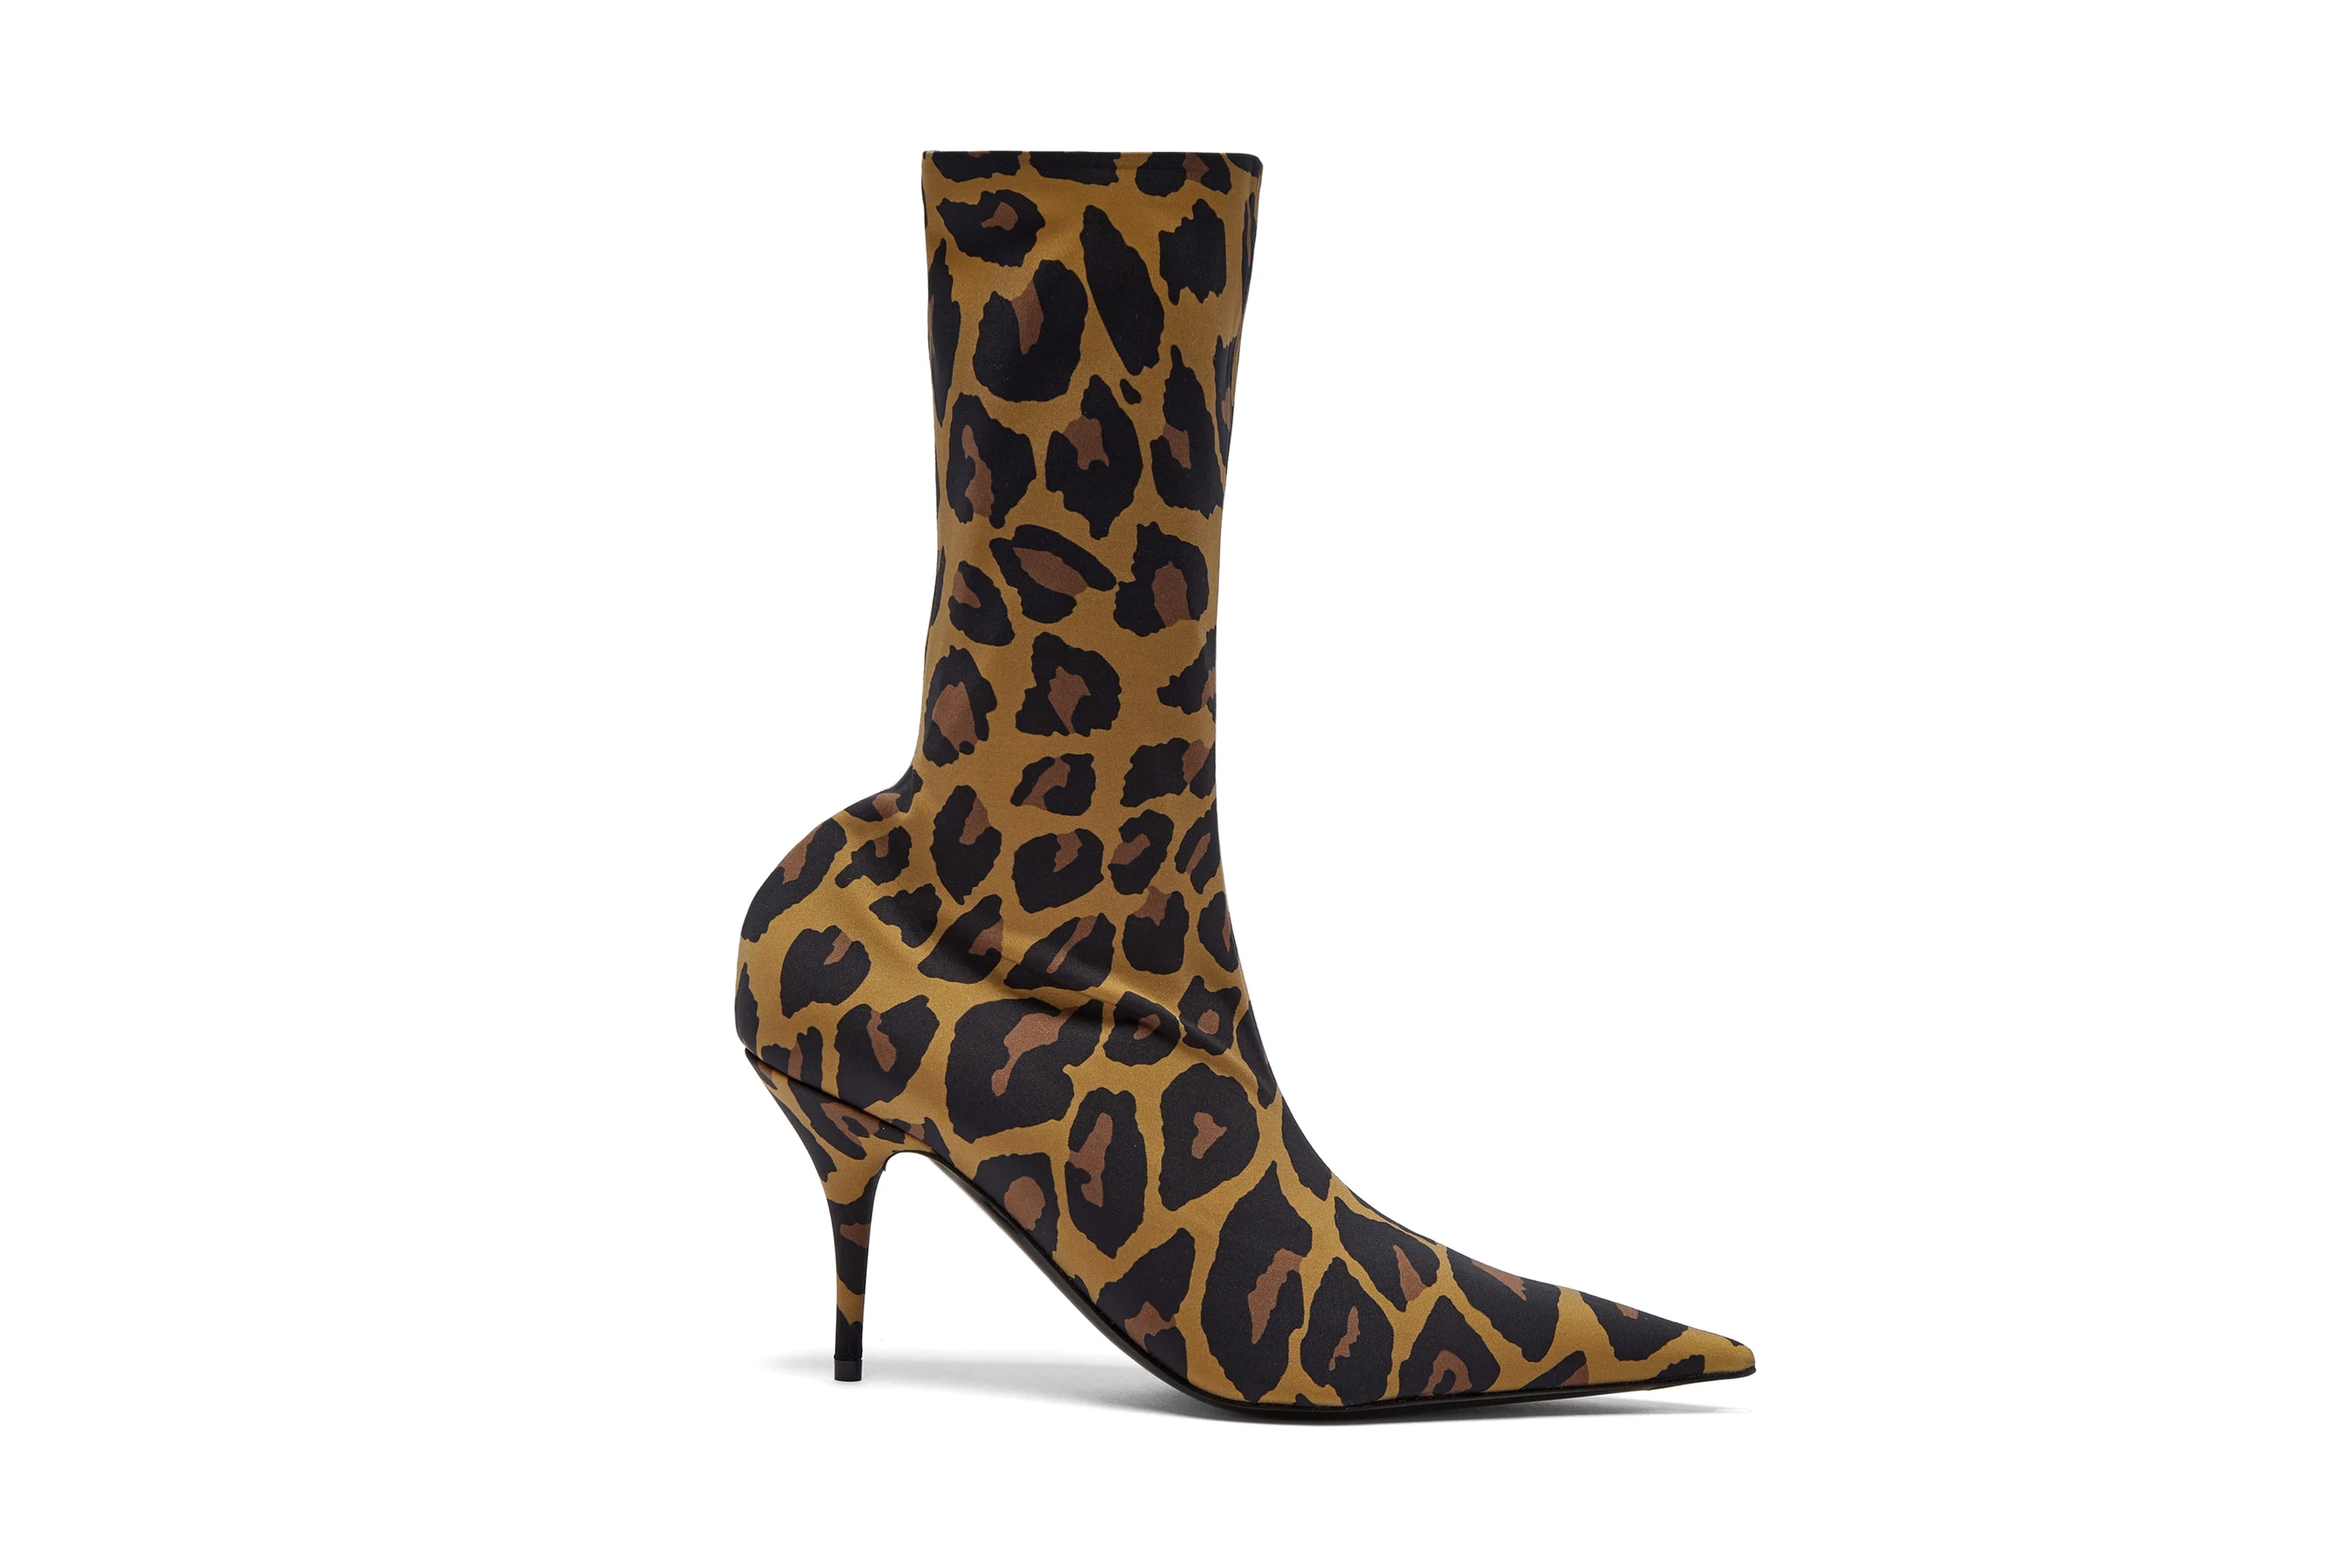 Balenciaga Knife Boots in Leopard Print Demna Gvasalia Sock Heels Shoe Classic